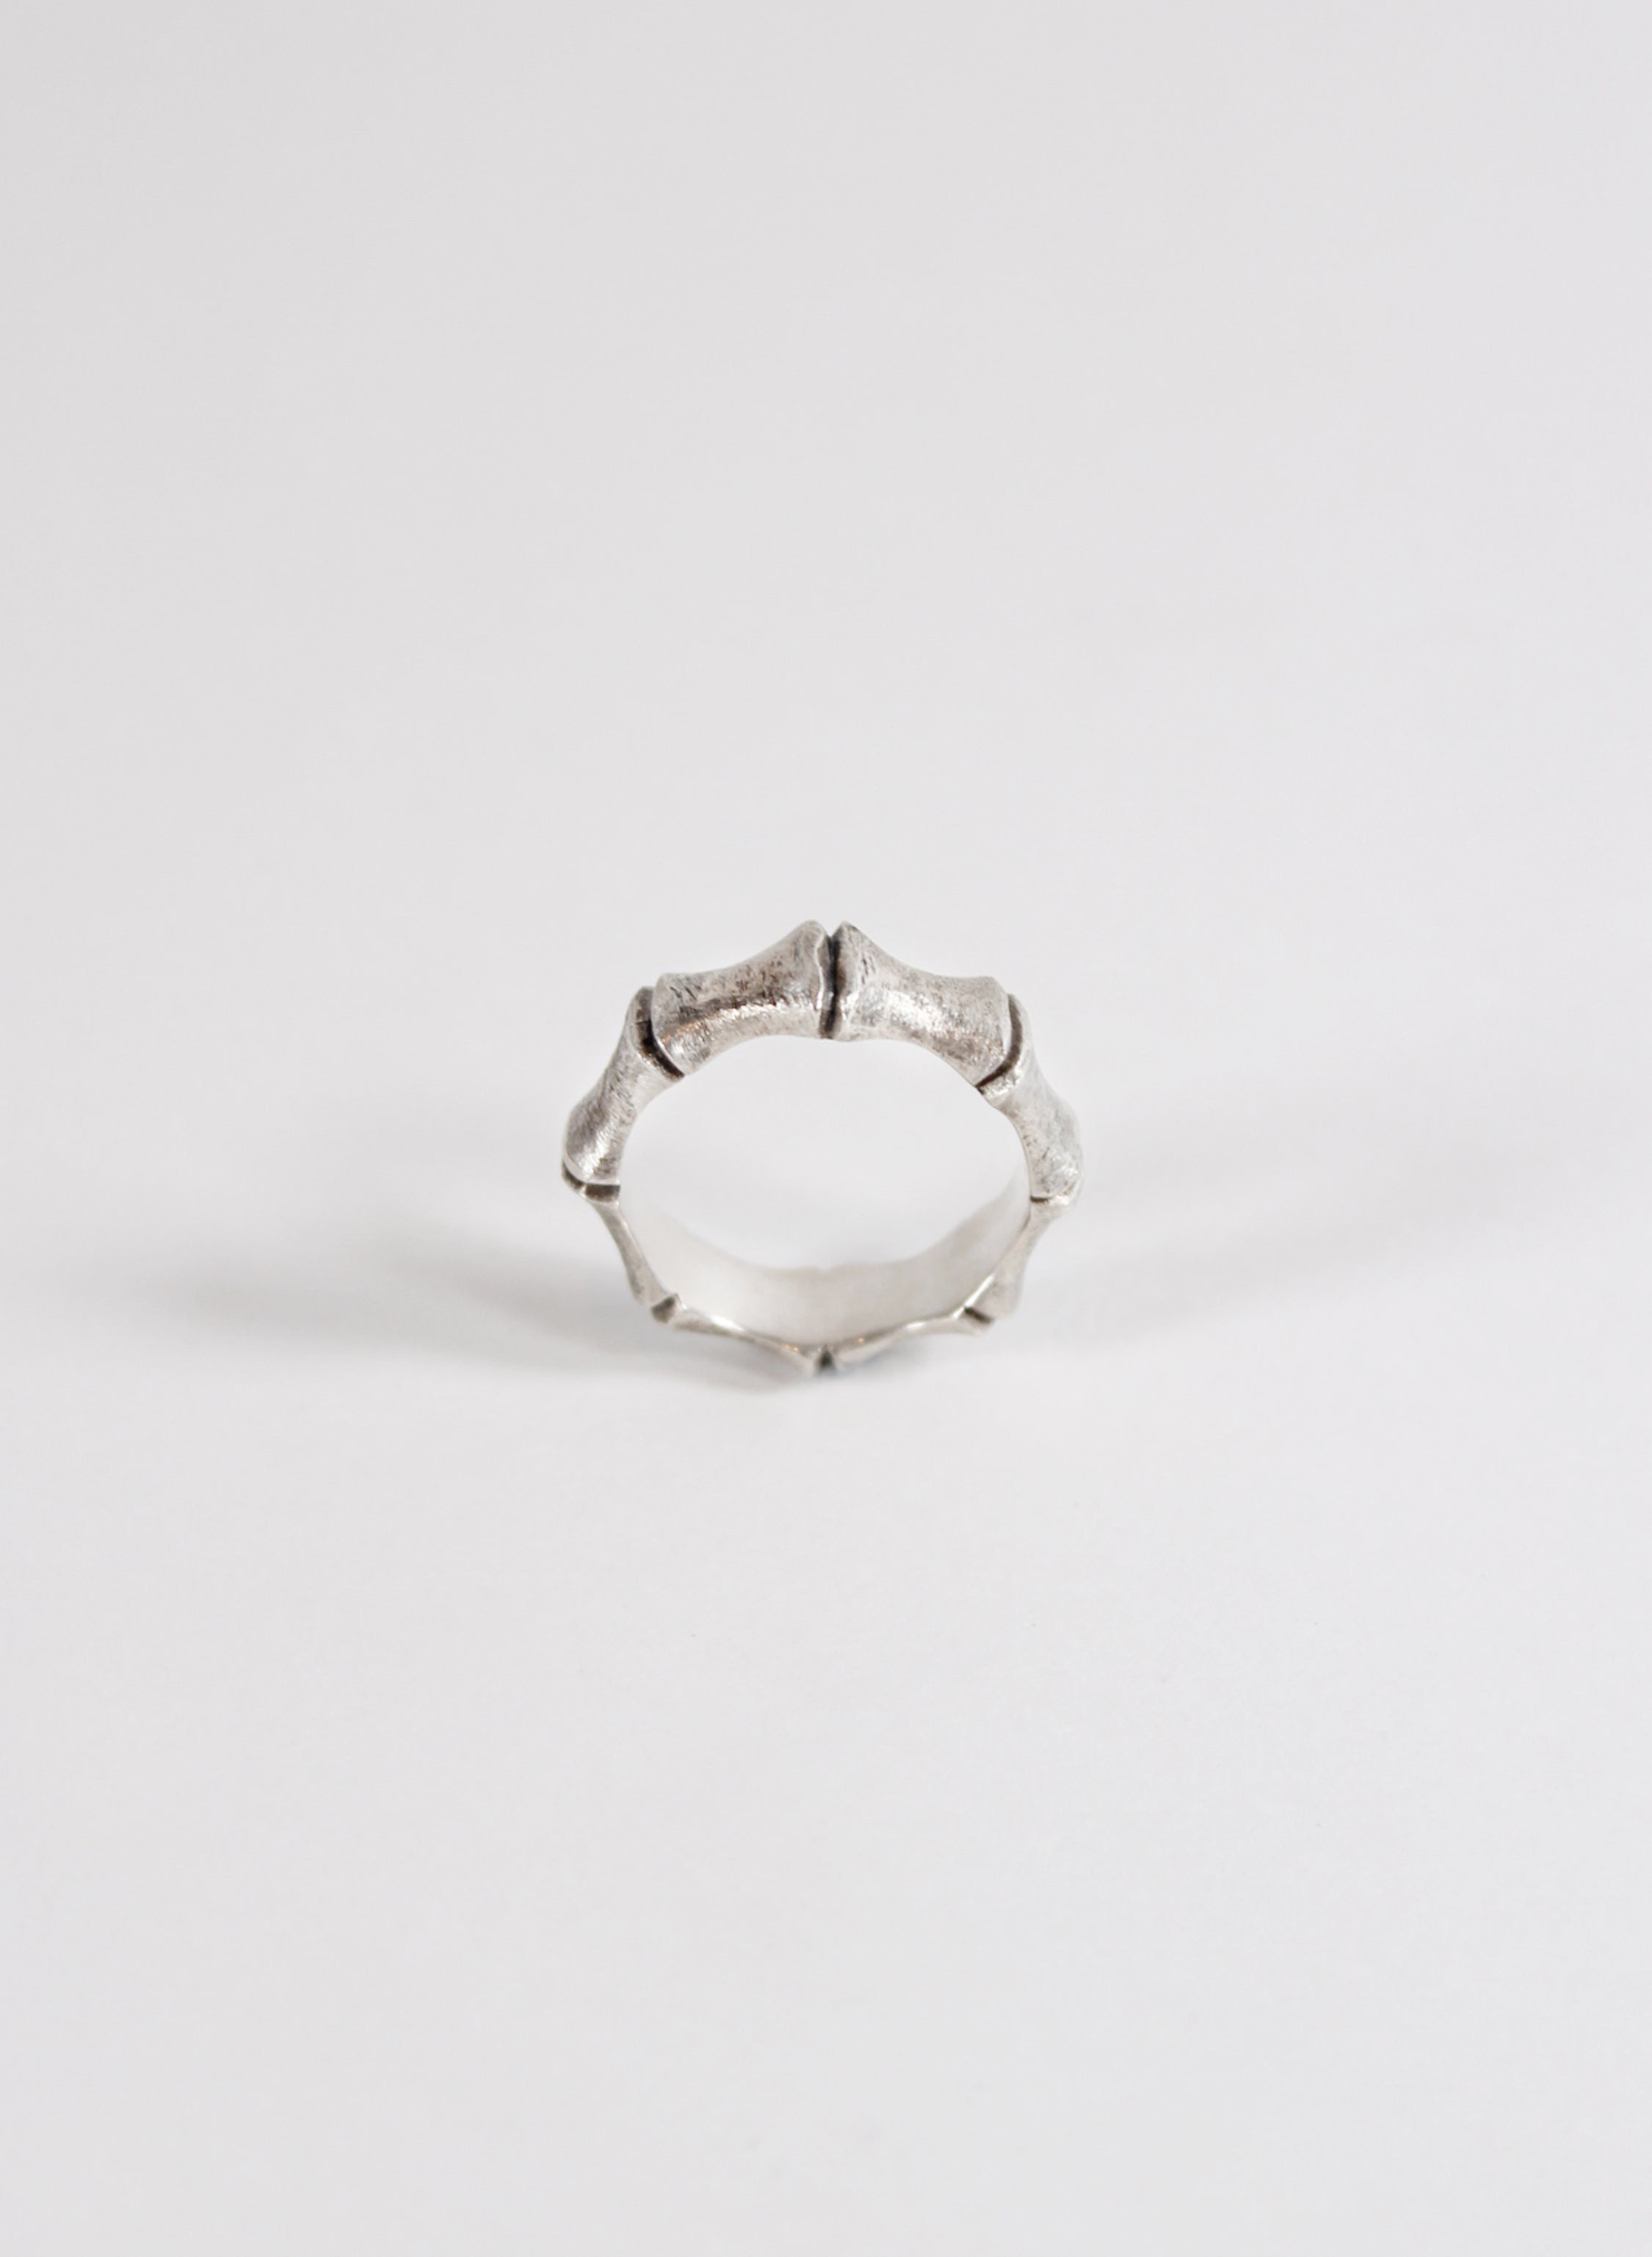 Tuaiwi Ring (8 Segment) - Sterling Silver